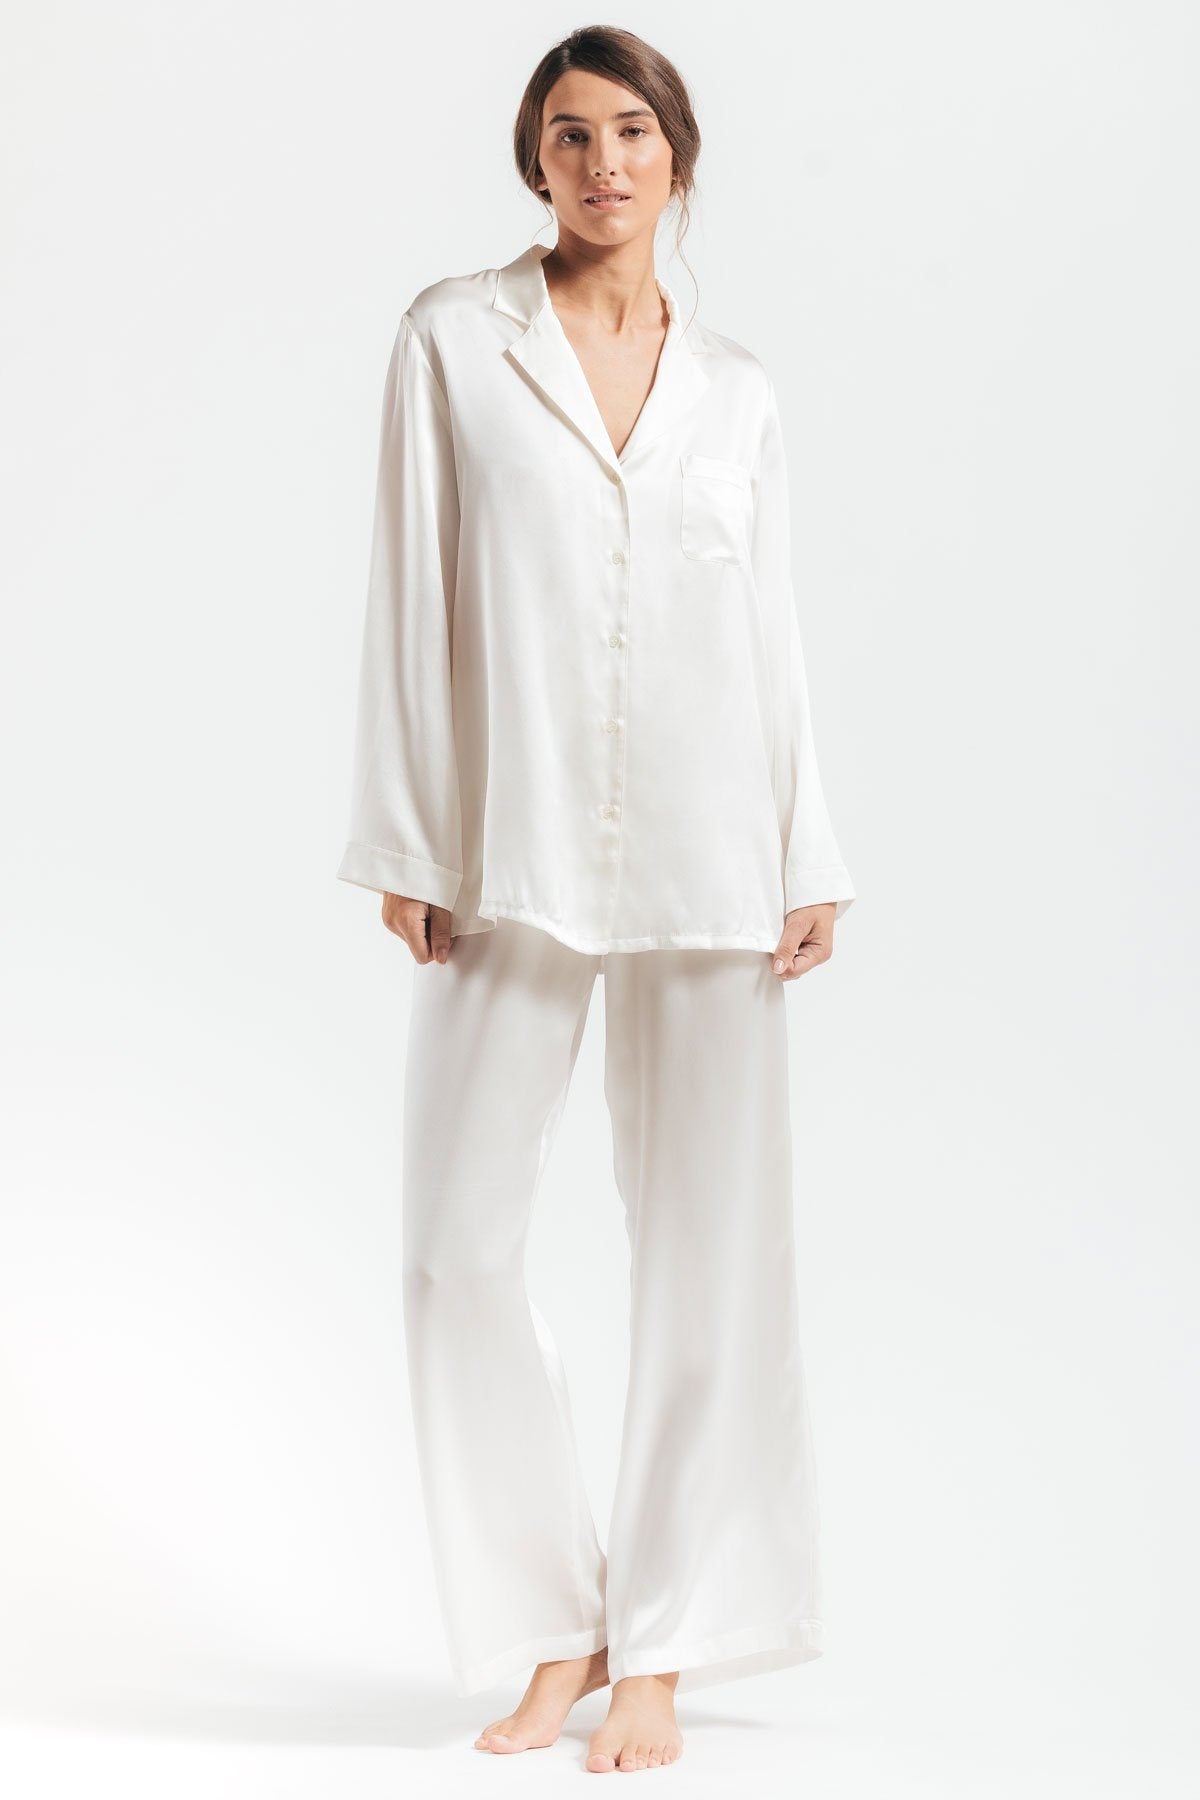 Model showcasing  Morgan Silk pajama set in ivory